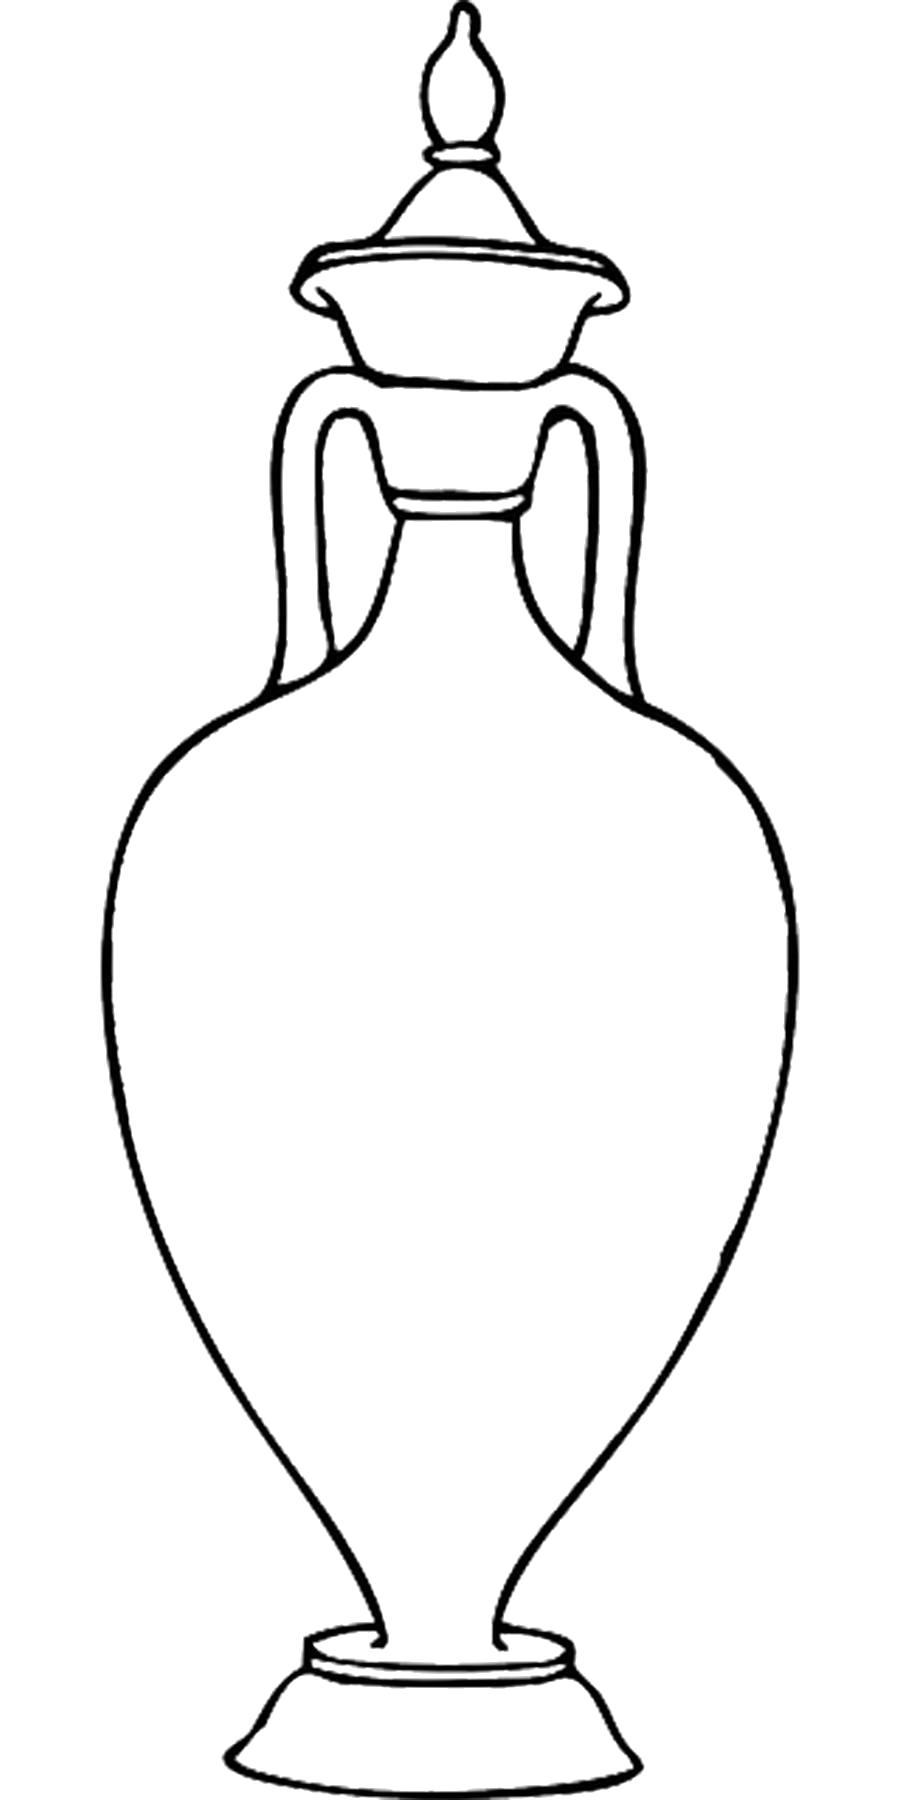 Раскраска Раскраски шаблон вазы ваза с крышкой контур для вырезания из бумаги. Шаблон